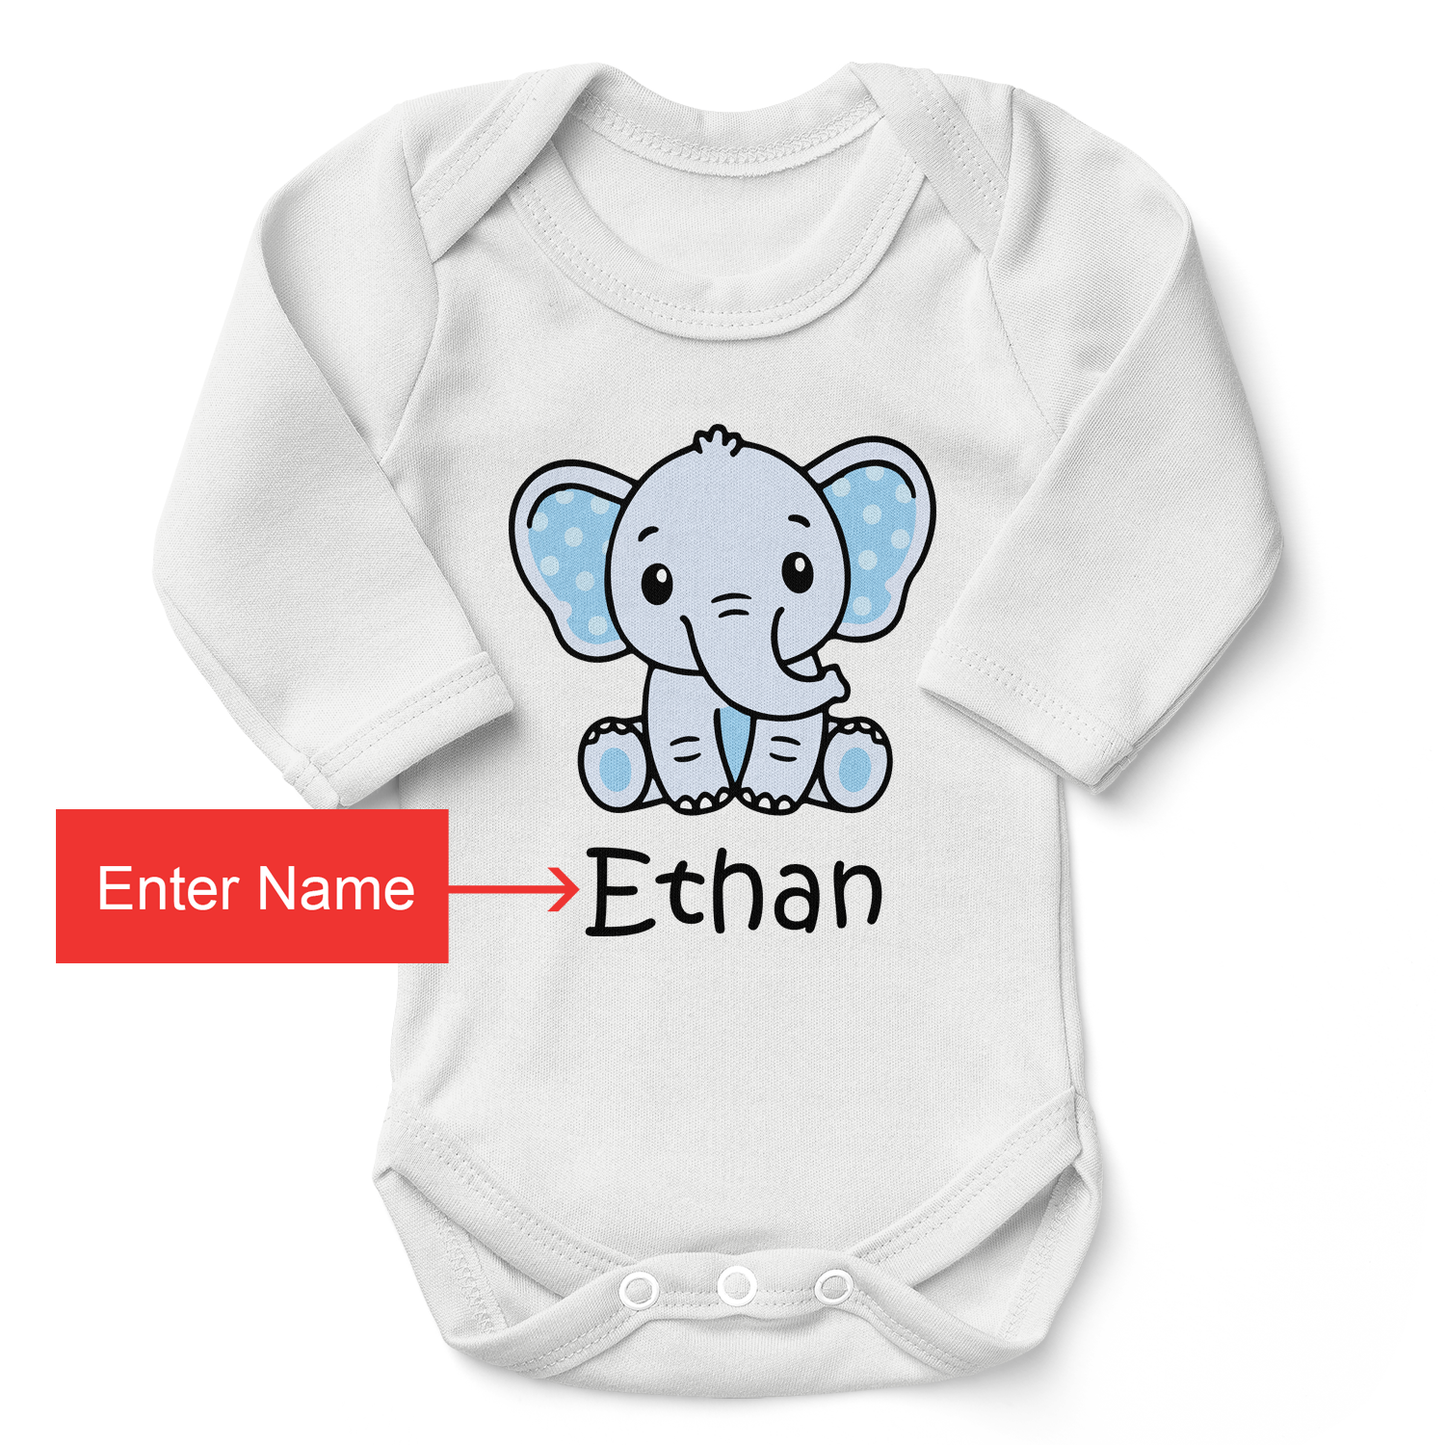 Zeronto Baby Boy Clothing Gift Box - Cute Elephants